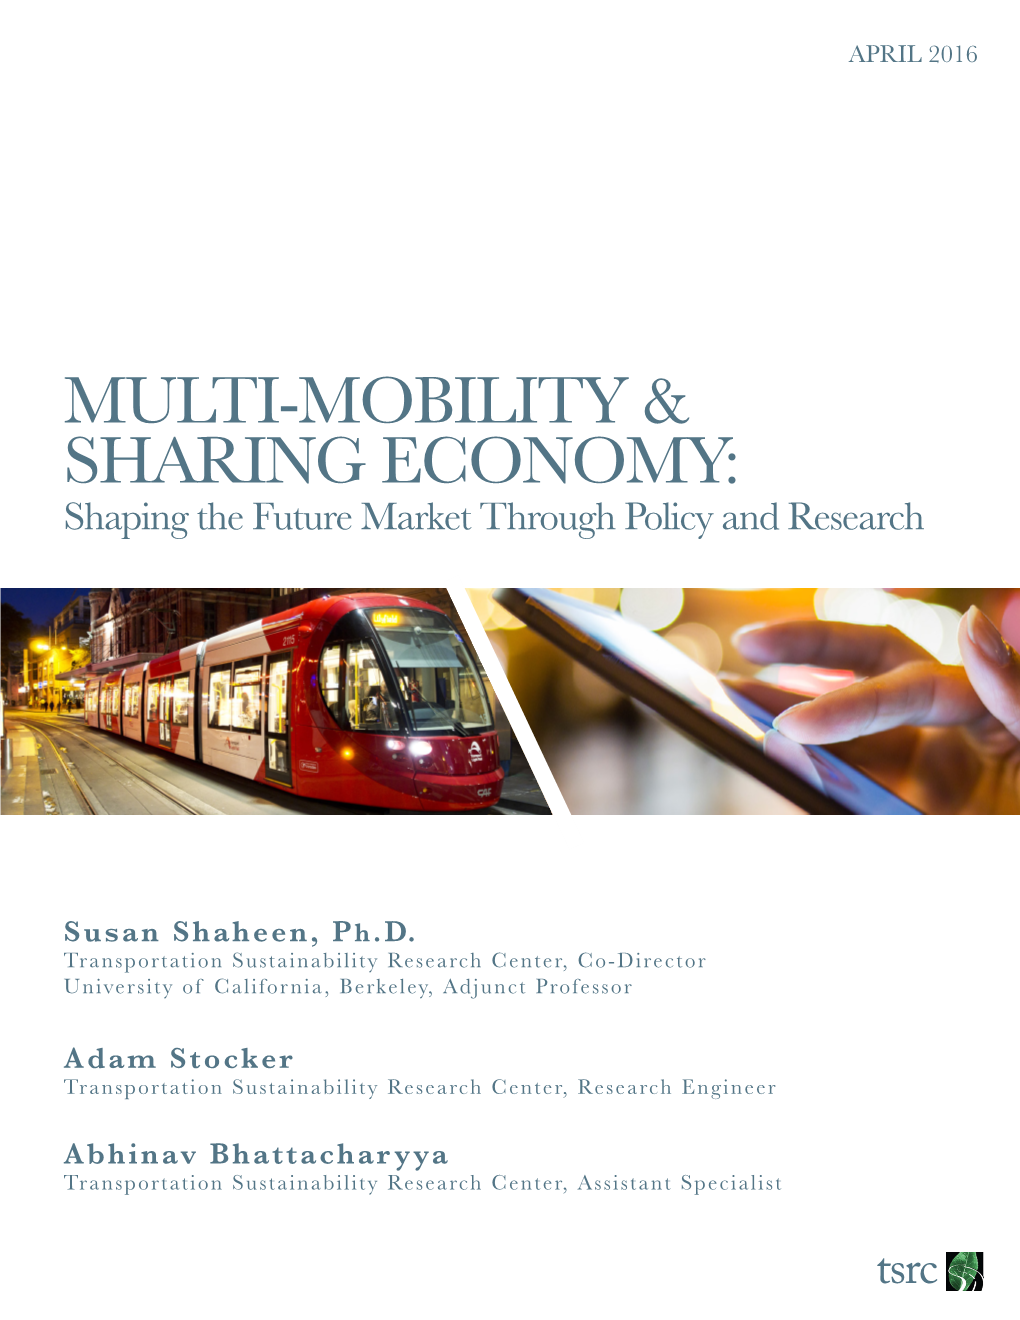 Multi-Mobility & Sharing Economy